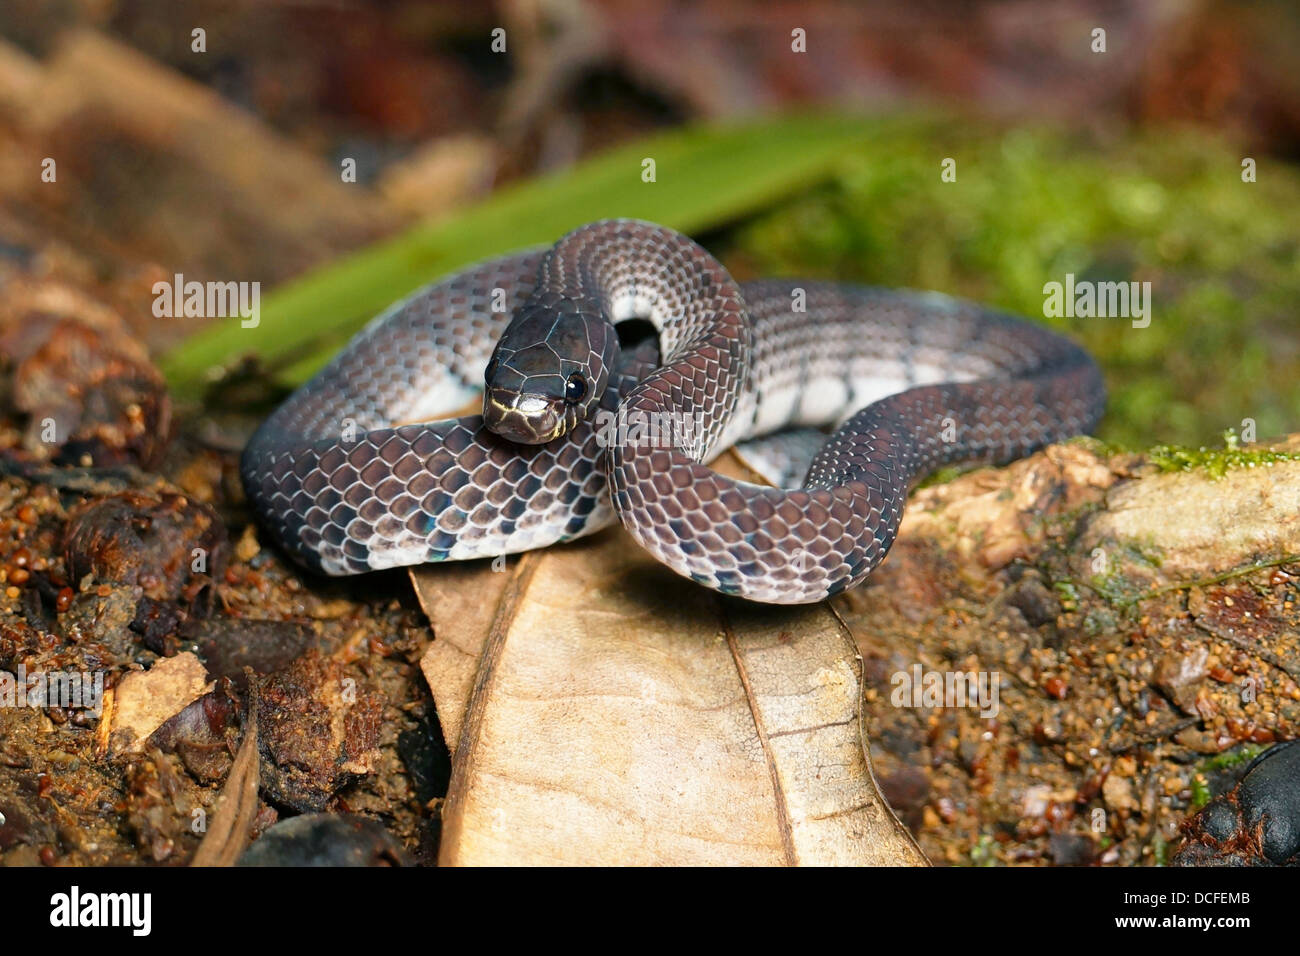 Asthenodipsas Pareas laevis blunt headed tree snake Borneo Stock Photo